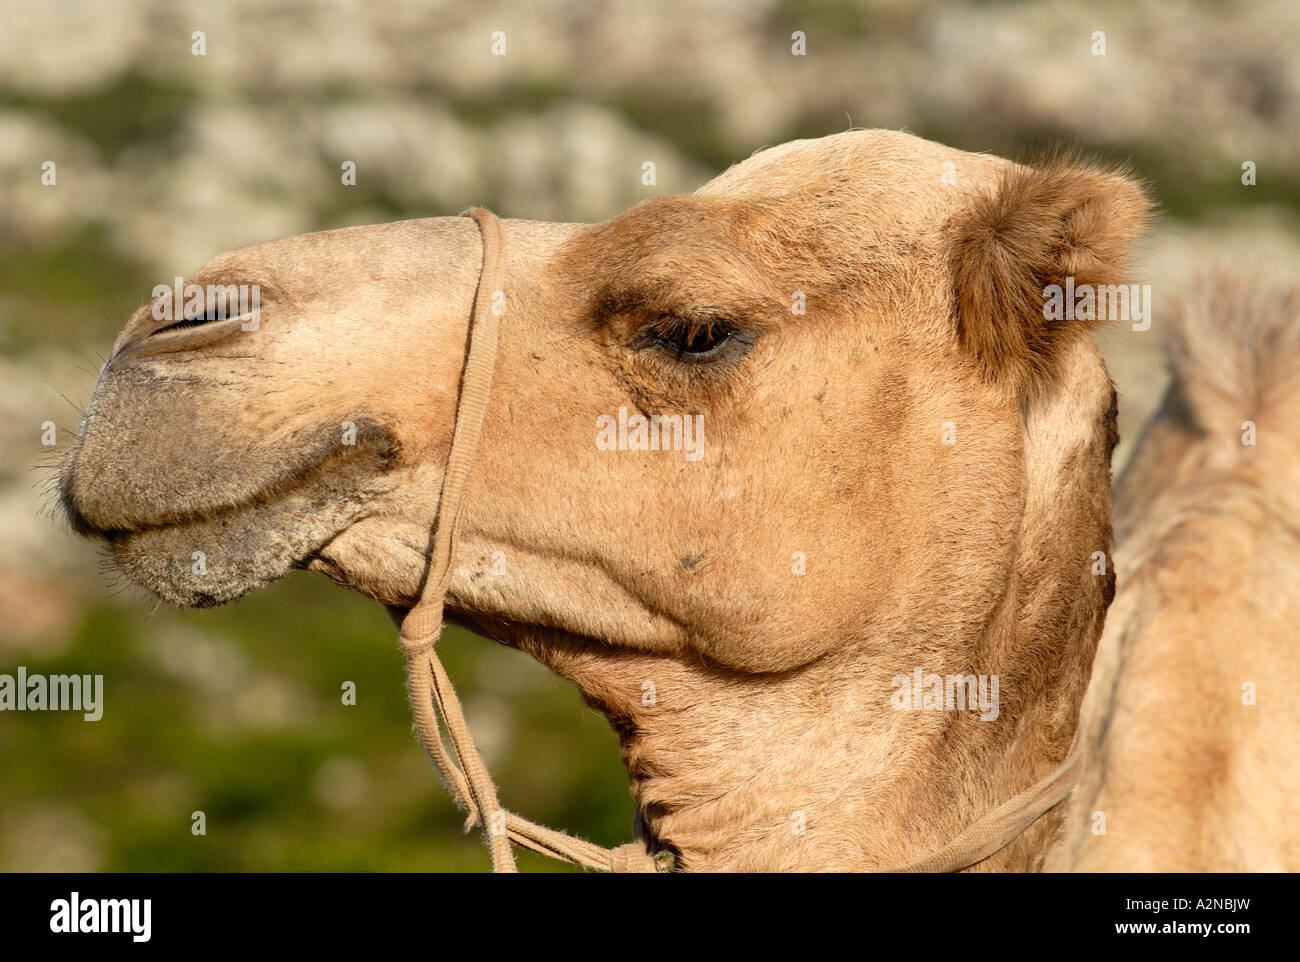 Socotra Island Animals Immagini e Fotos Stock - Alamy